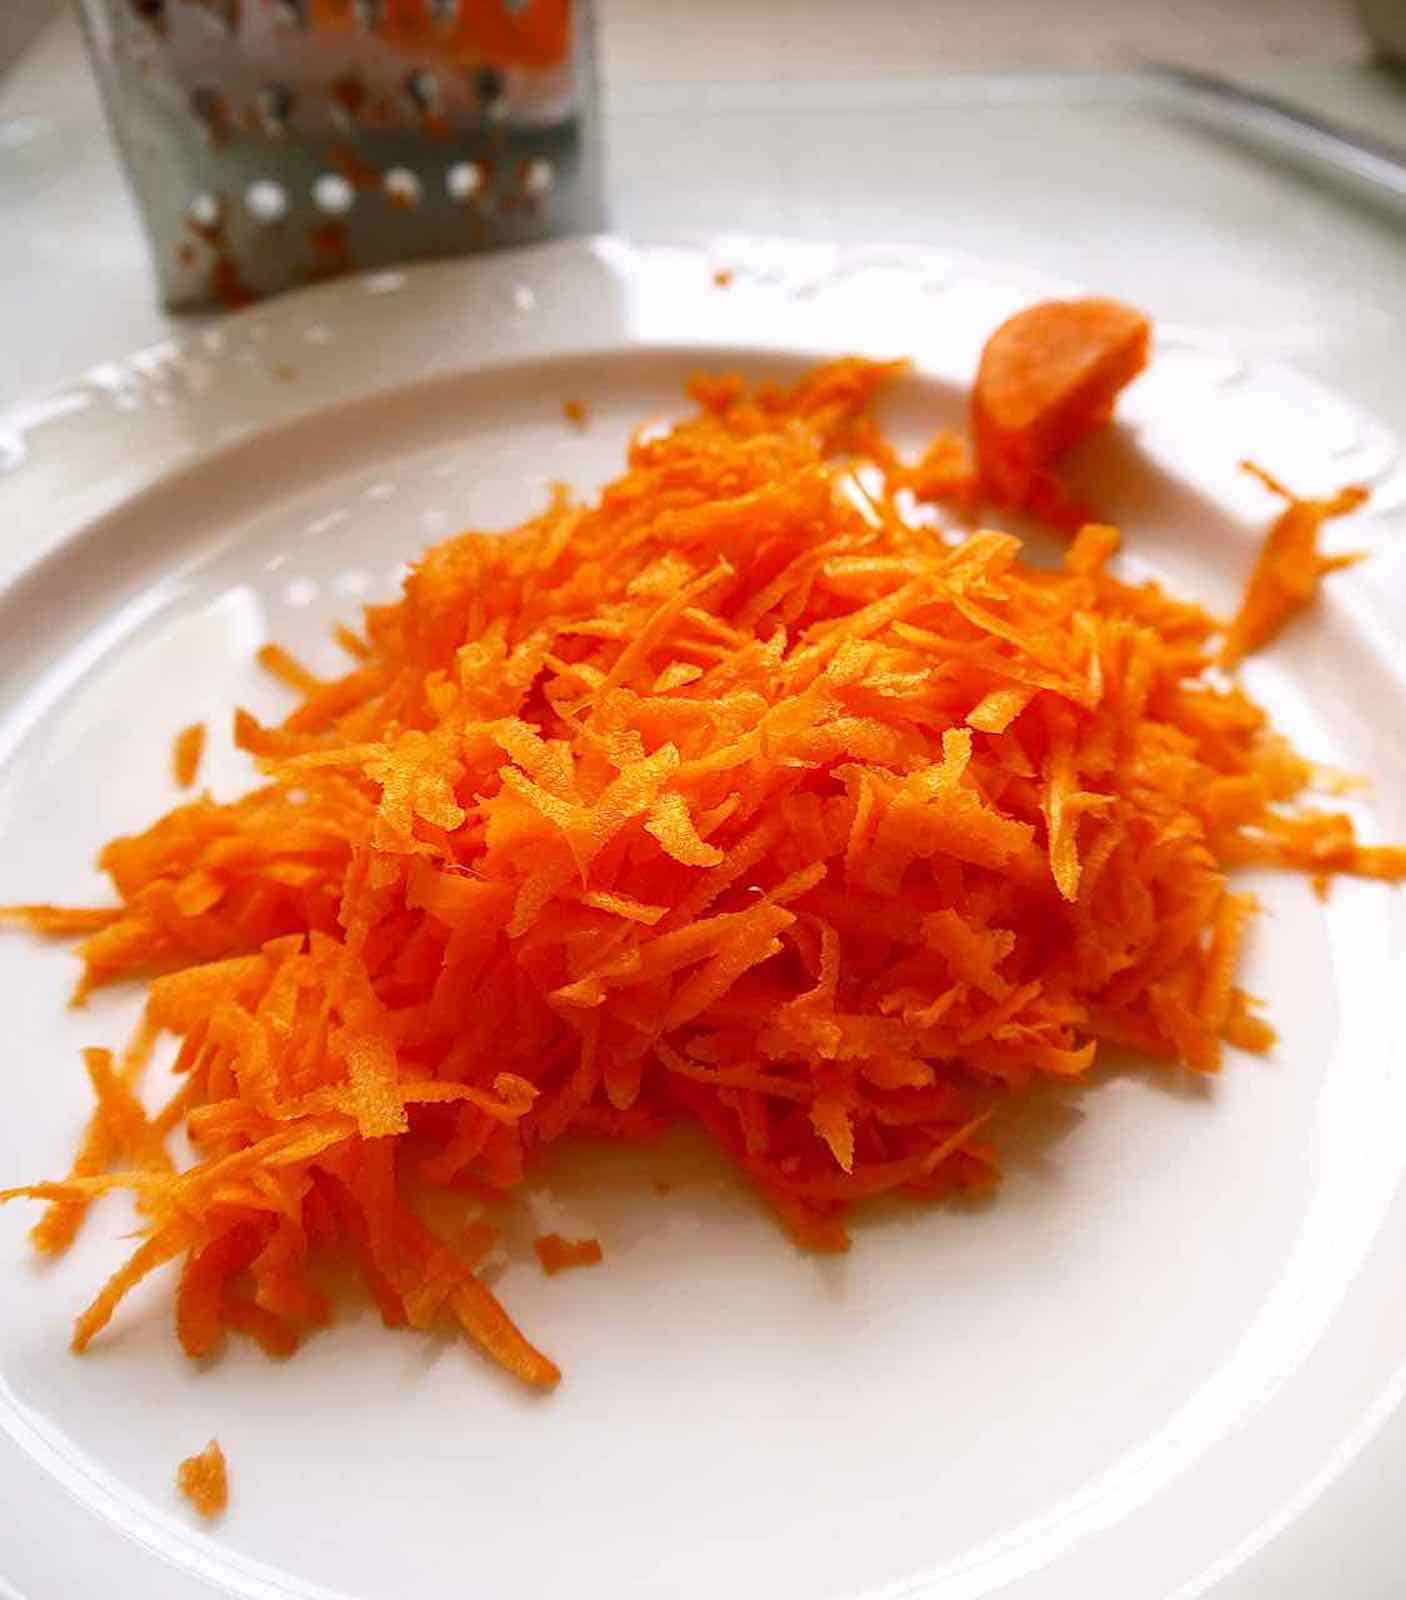 Shredded carrots on a plate.